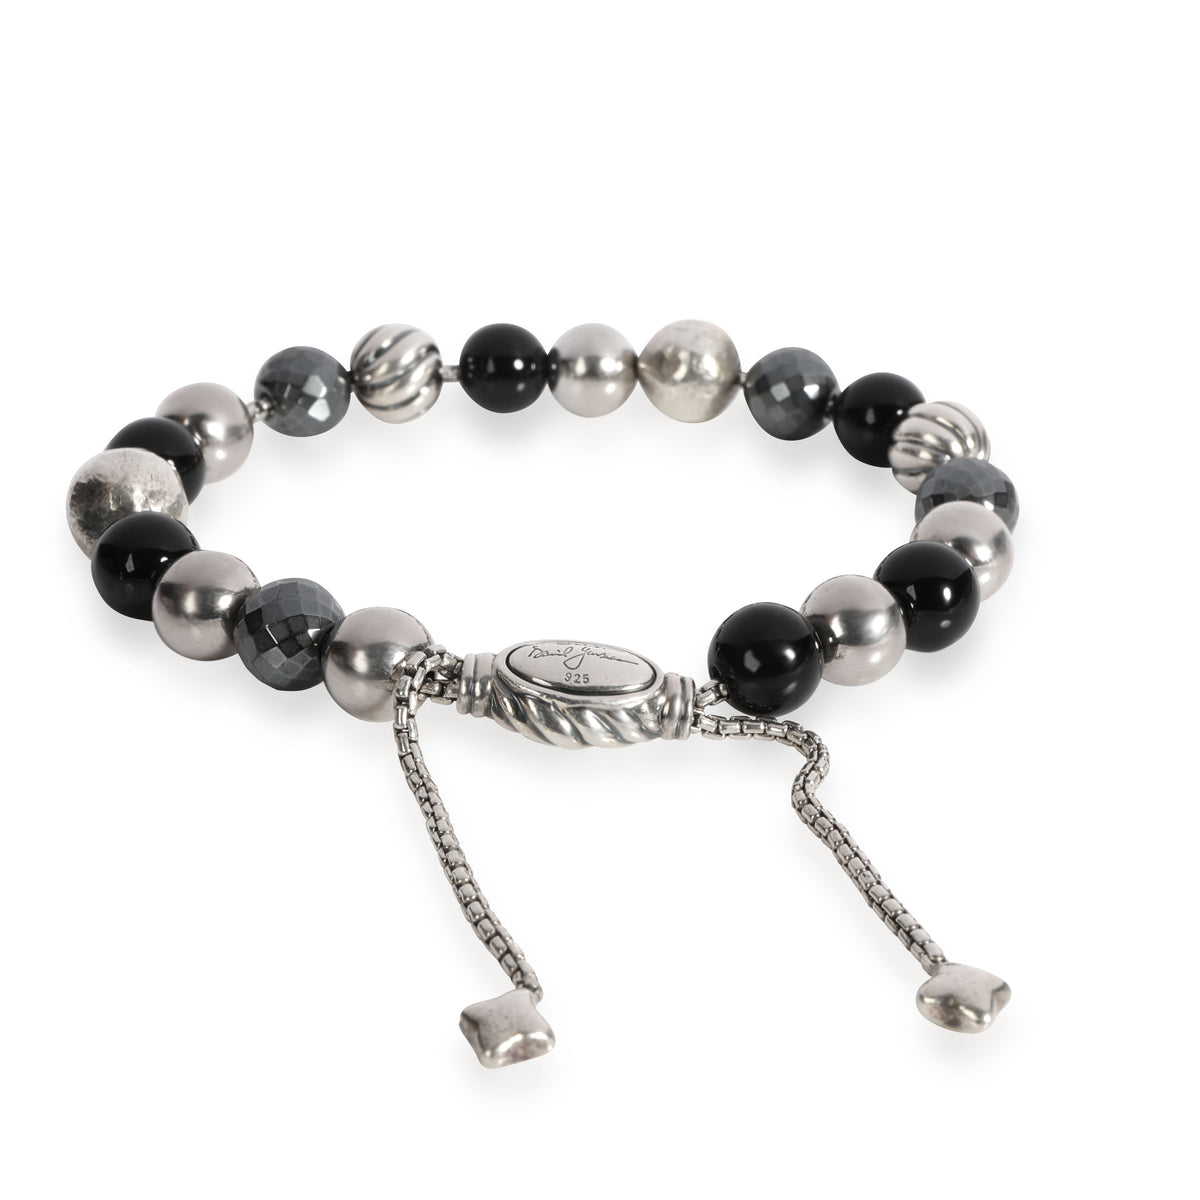 David Yurman Hematite & Black Onyx Spiritual Beads Bracelet in Sterling Silver